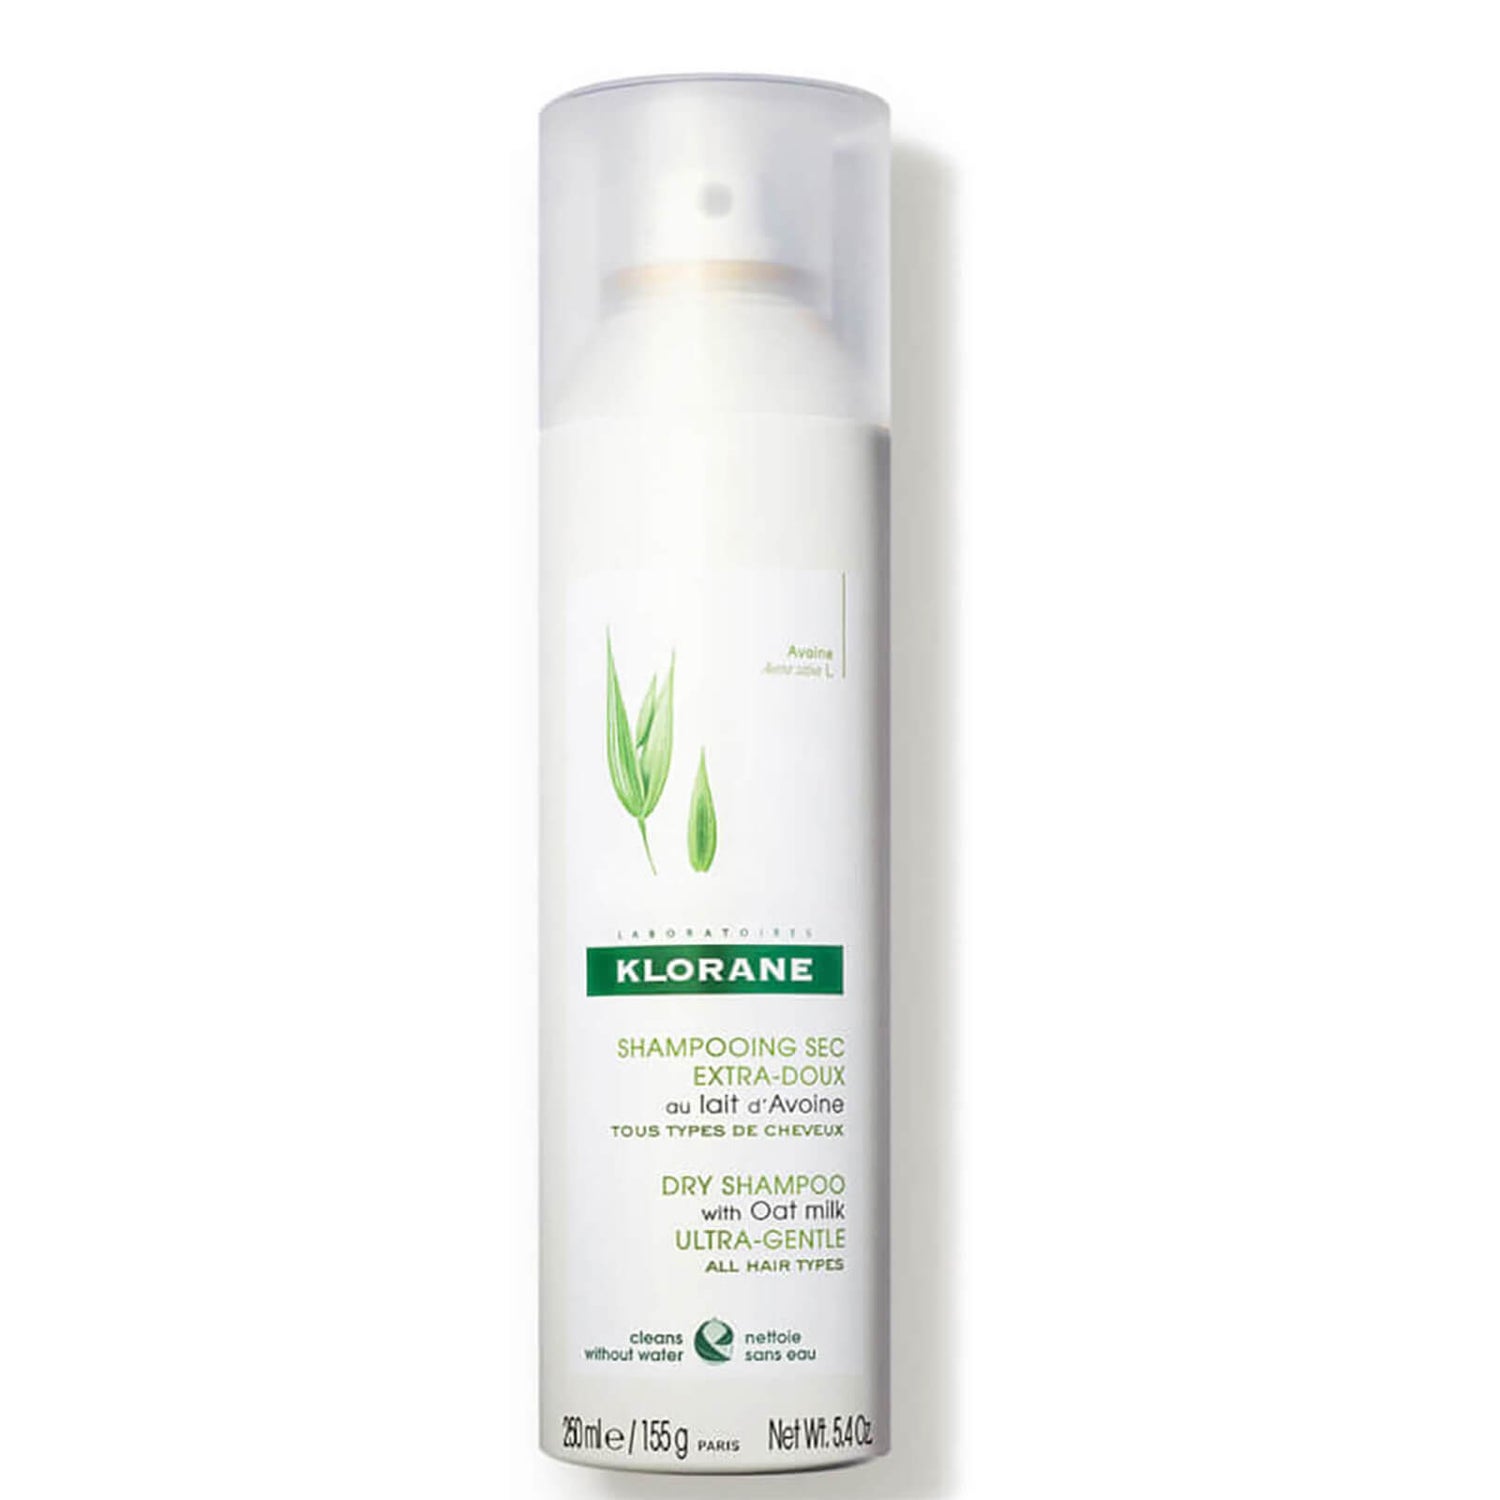 Klorane Dry Shampoo with Oat Milk - All Hair Types 5.4 oz Livrare gratuită Lookfantastic